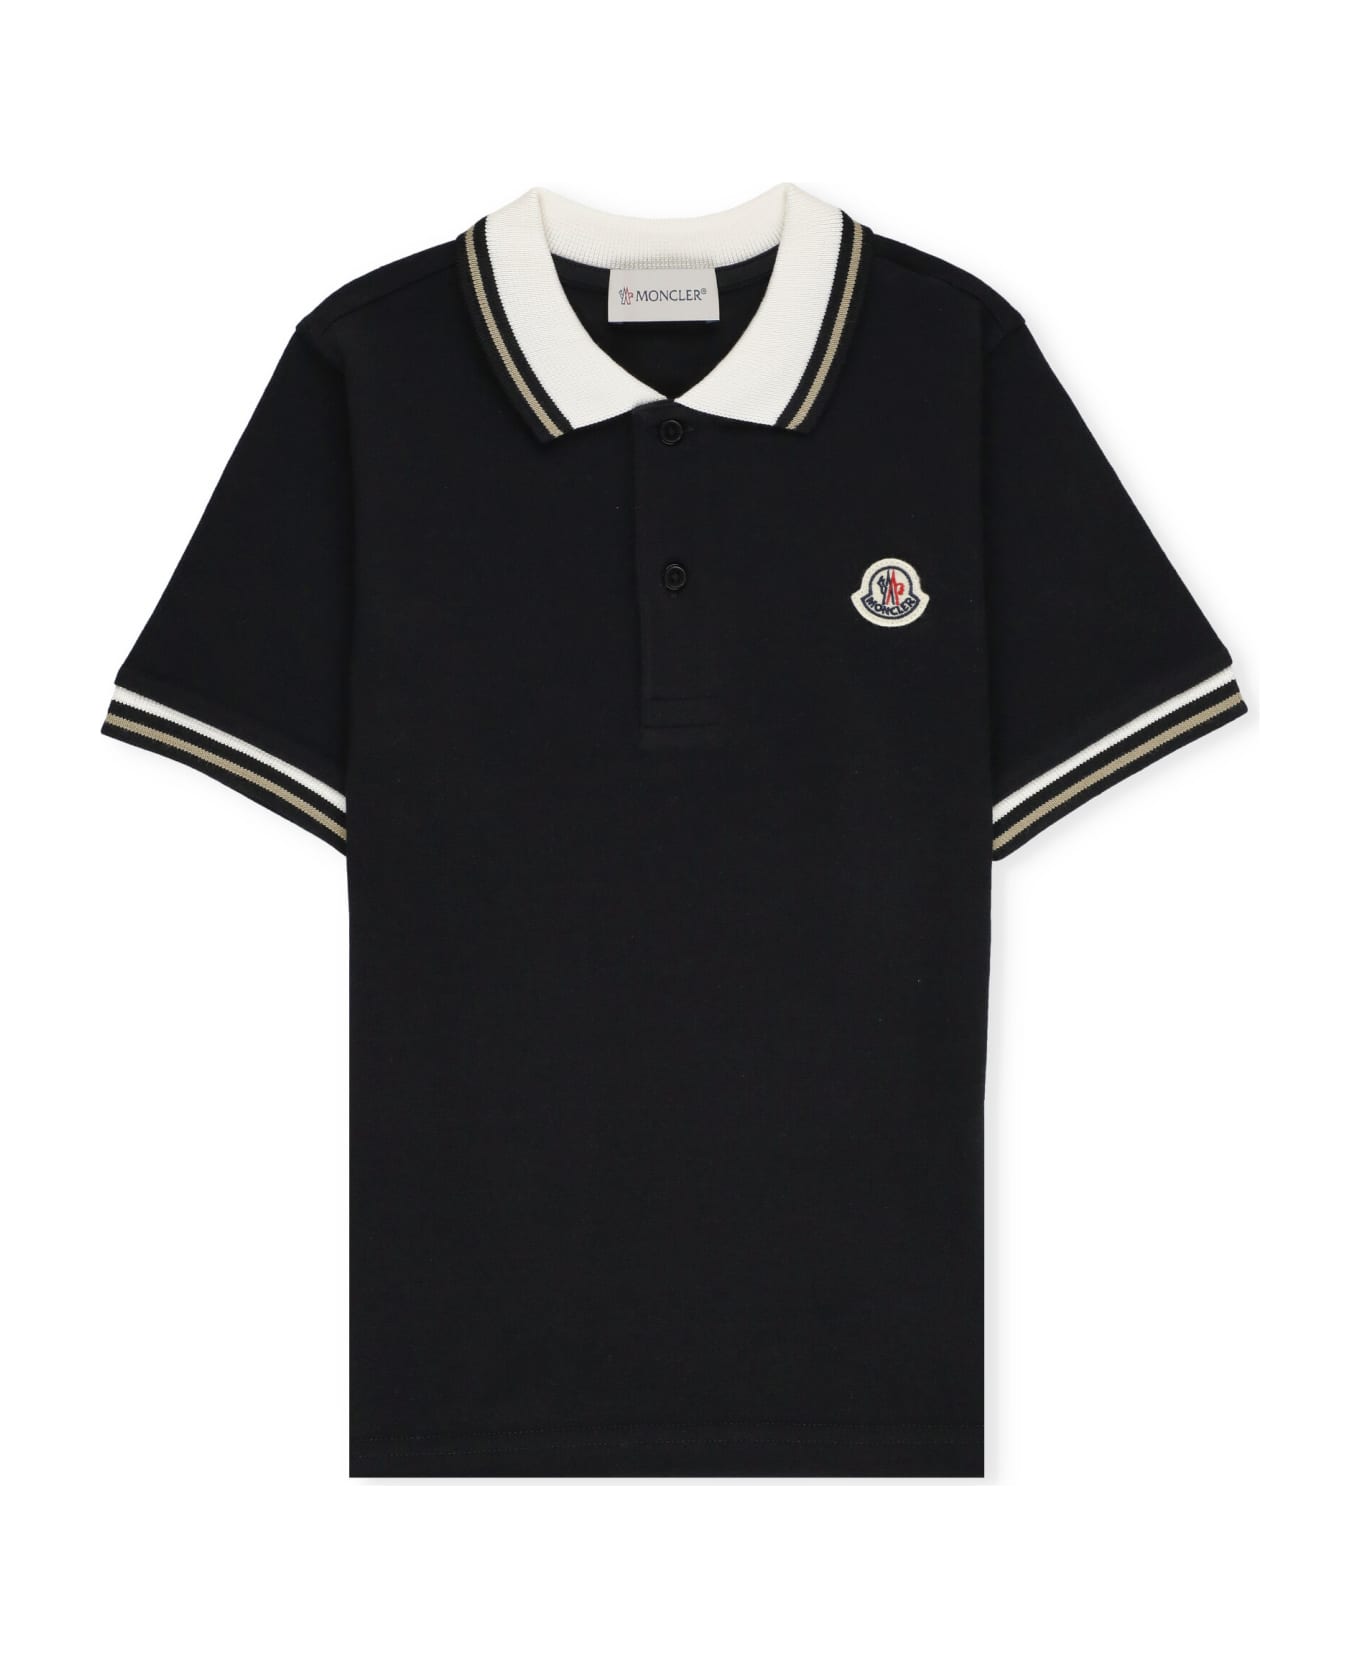 Moncler Logoed Polo Shirt